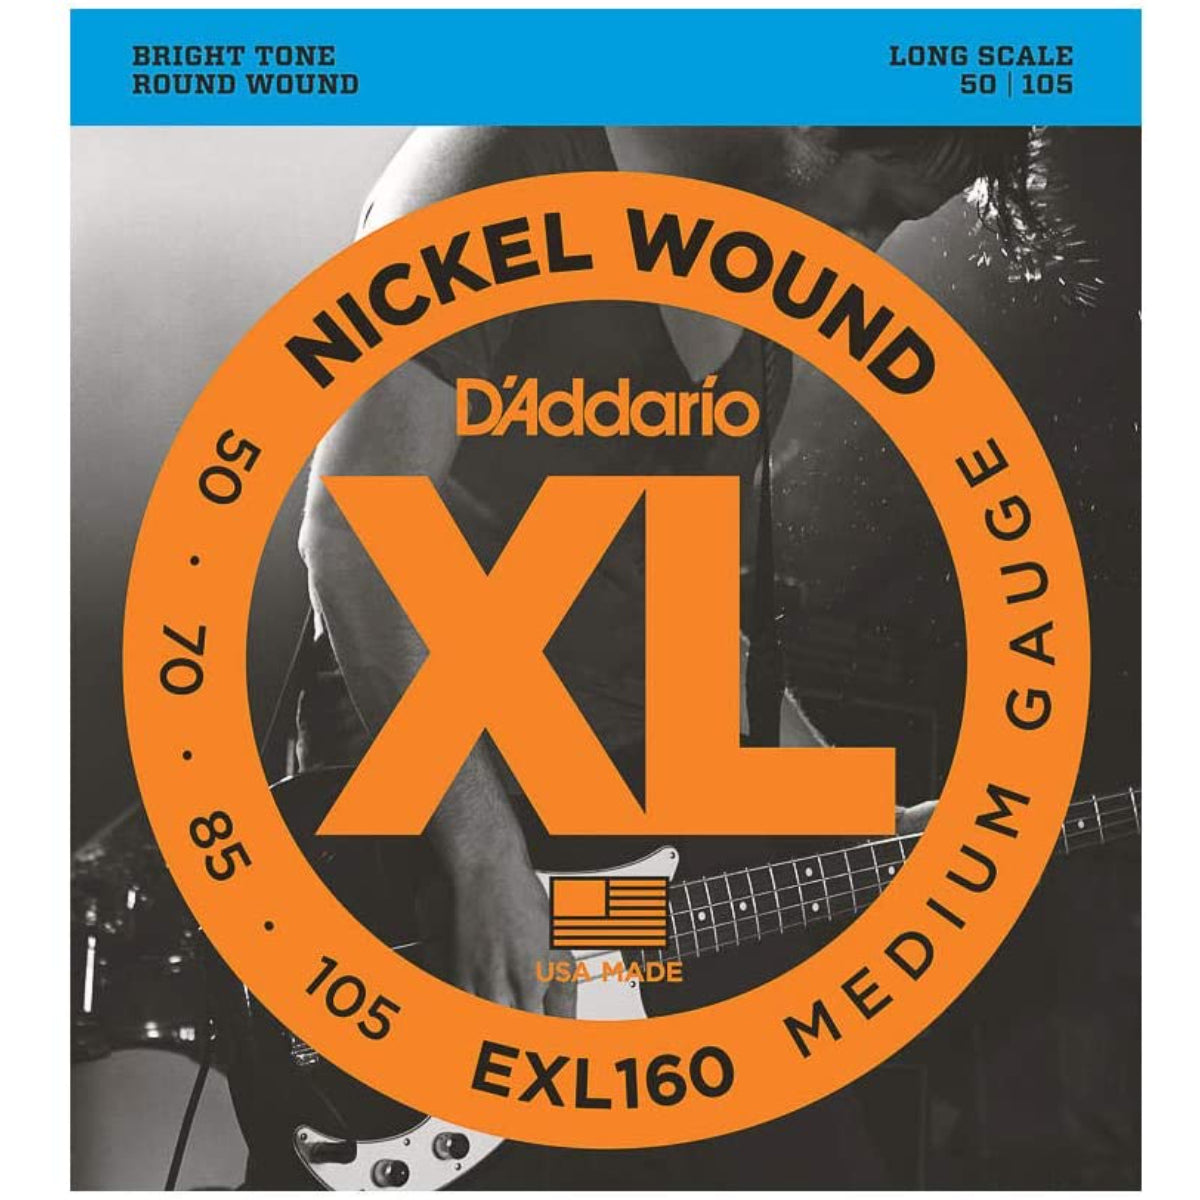 D'Addario EXL160 XL Nickel Round Wound Bass Strings 50-105 Medium / Long Scale Set